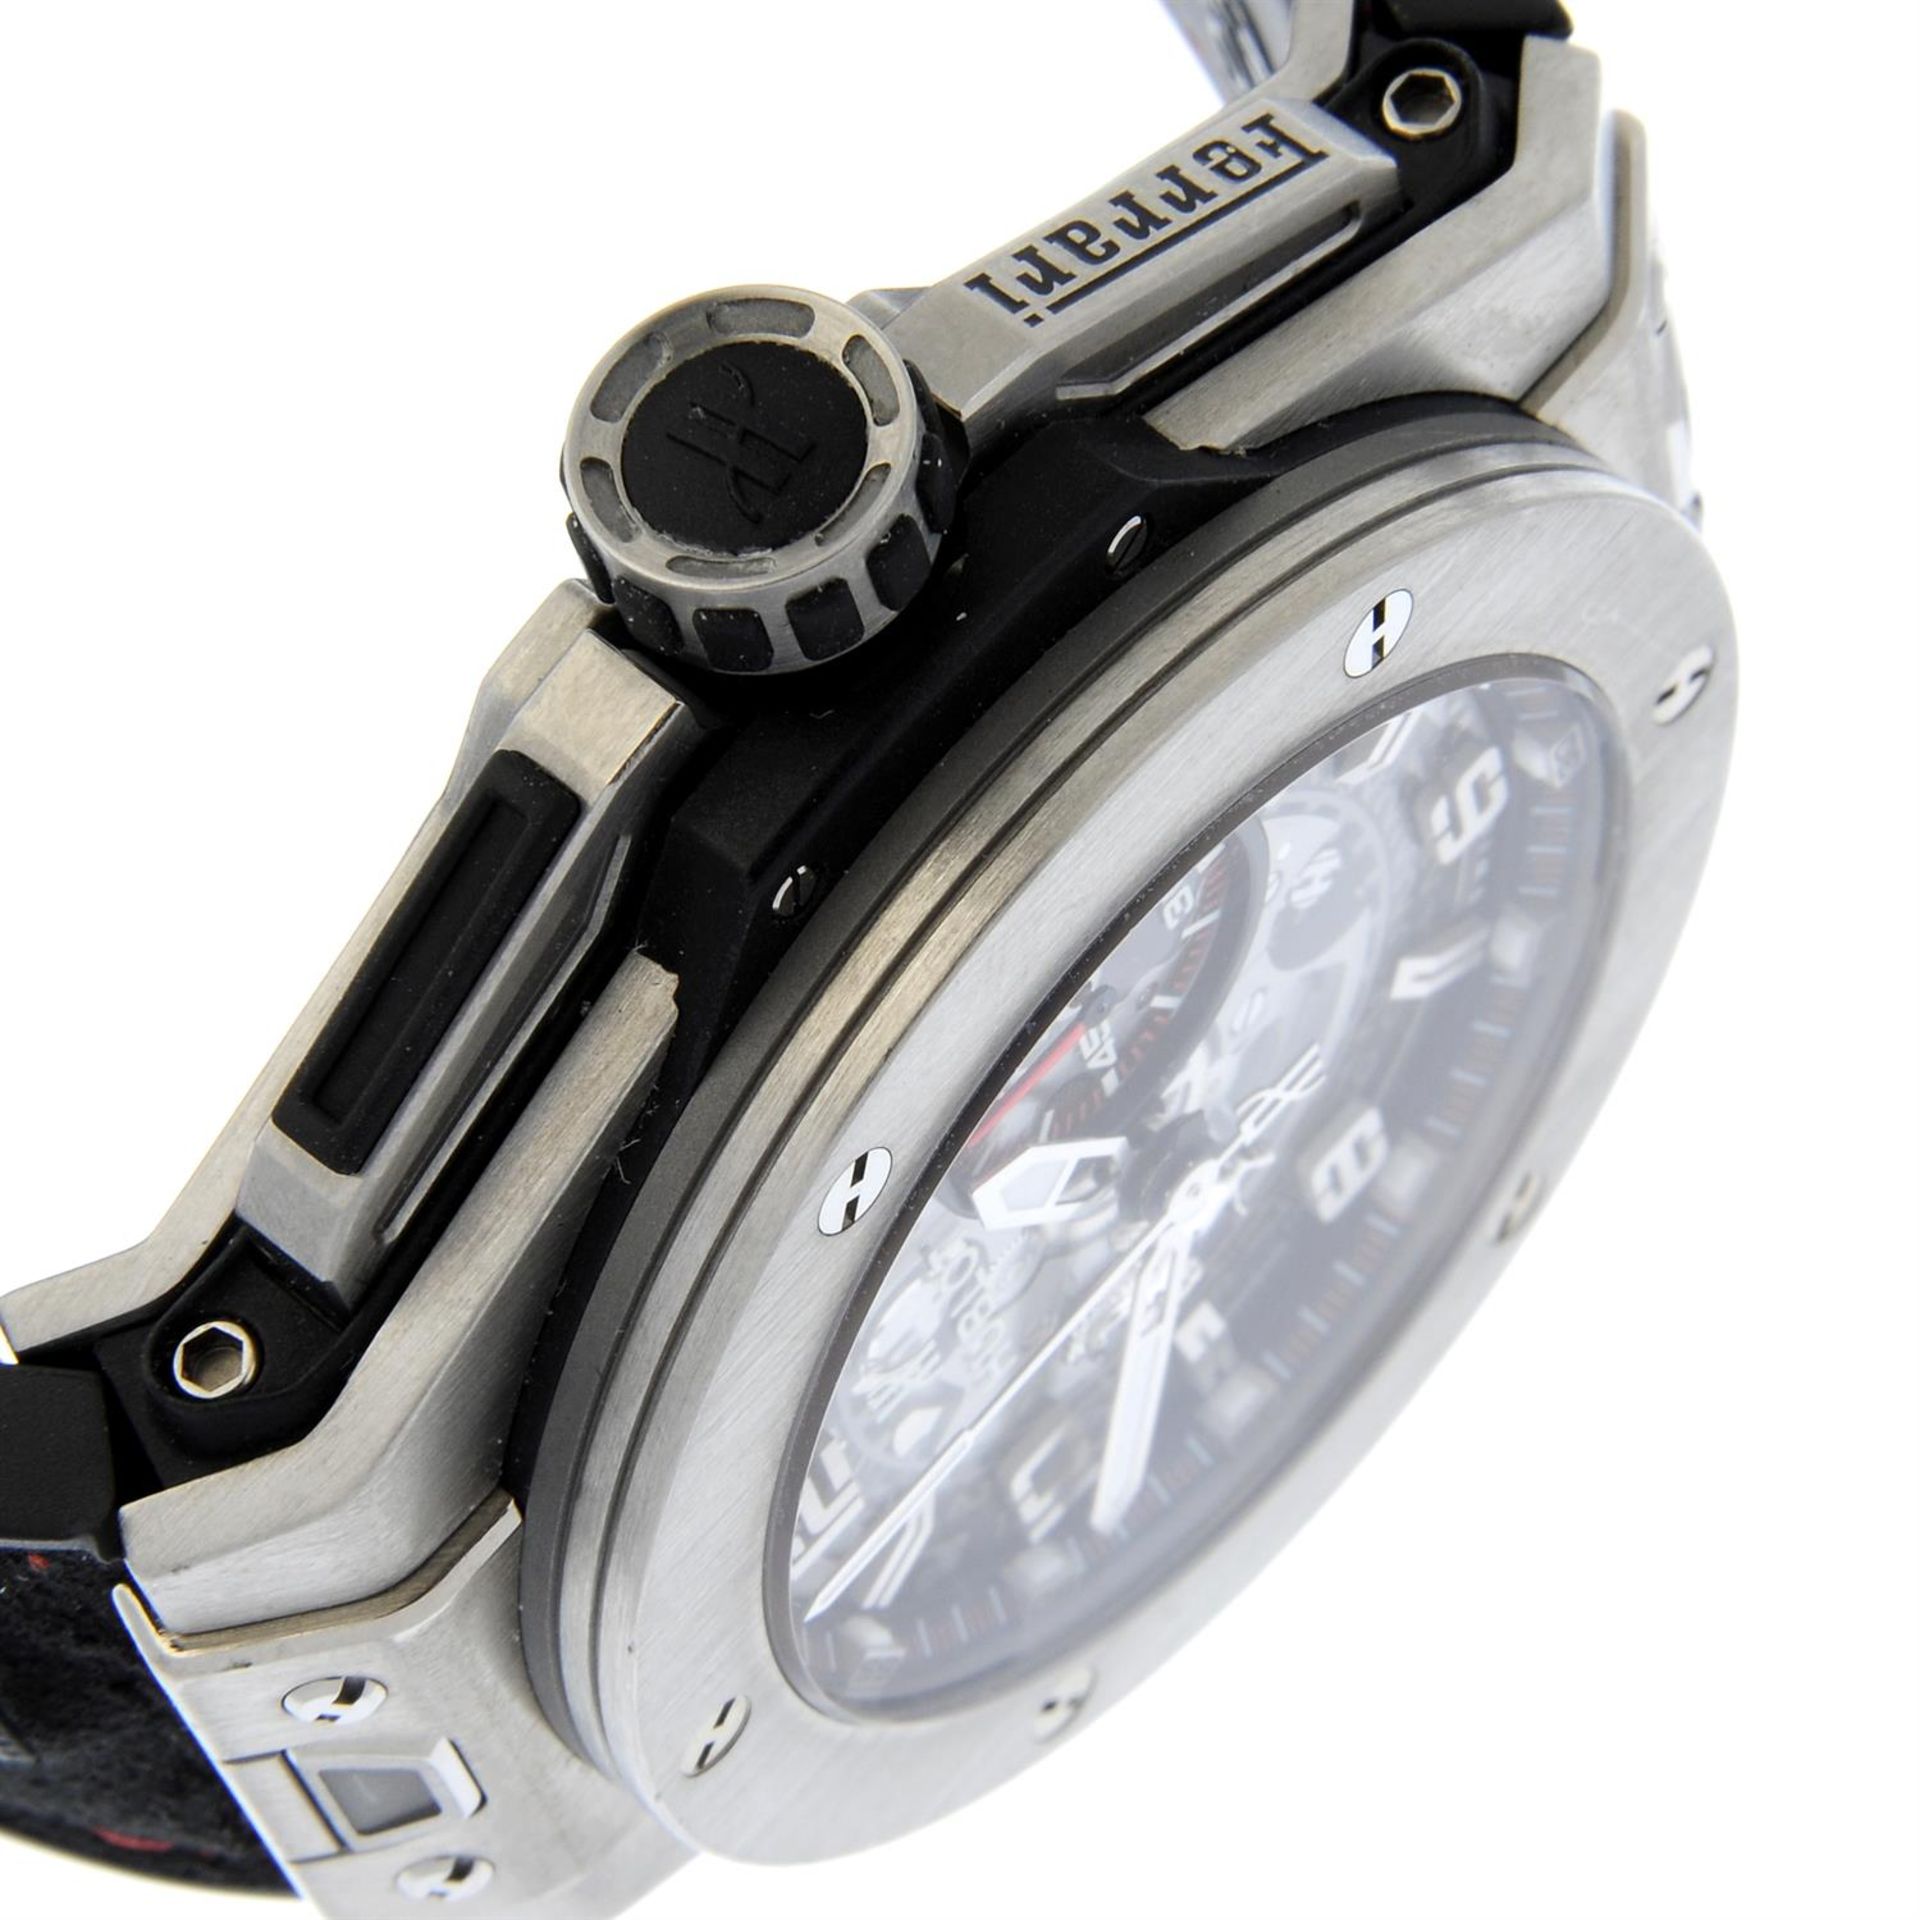 HUBLOT - a limited edition bi-material Big Bang Ferrari Unico wrist watch, 49mm. - Image 3 of 6